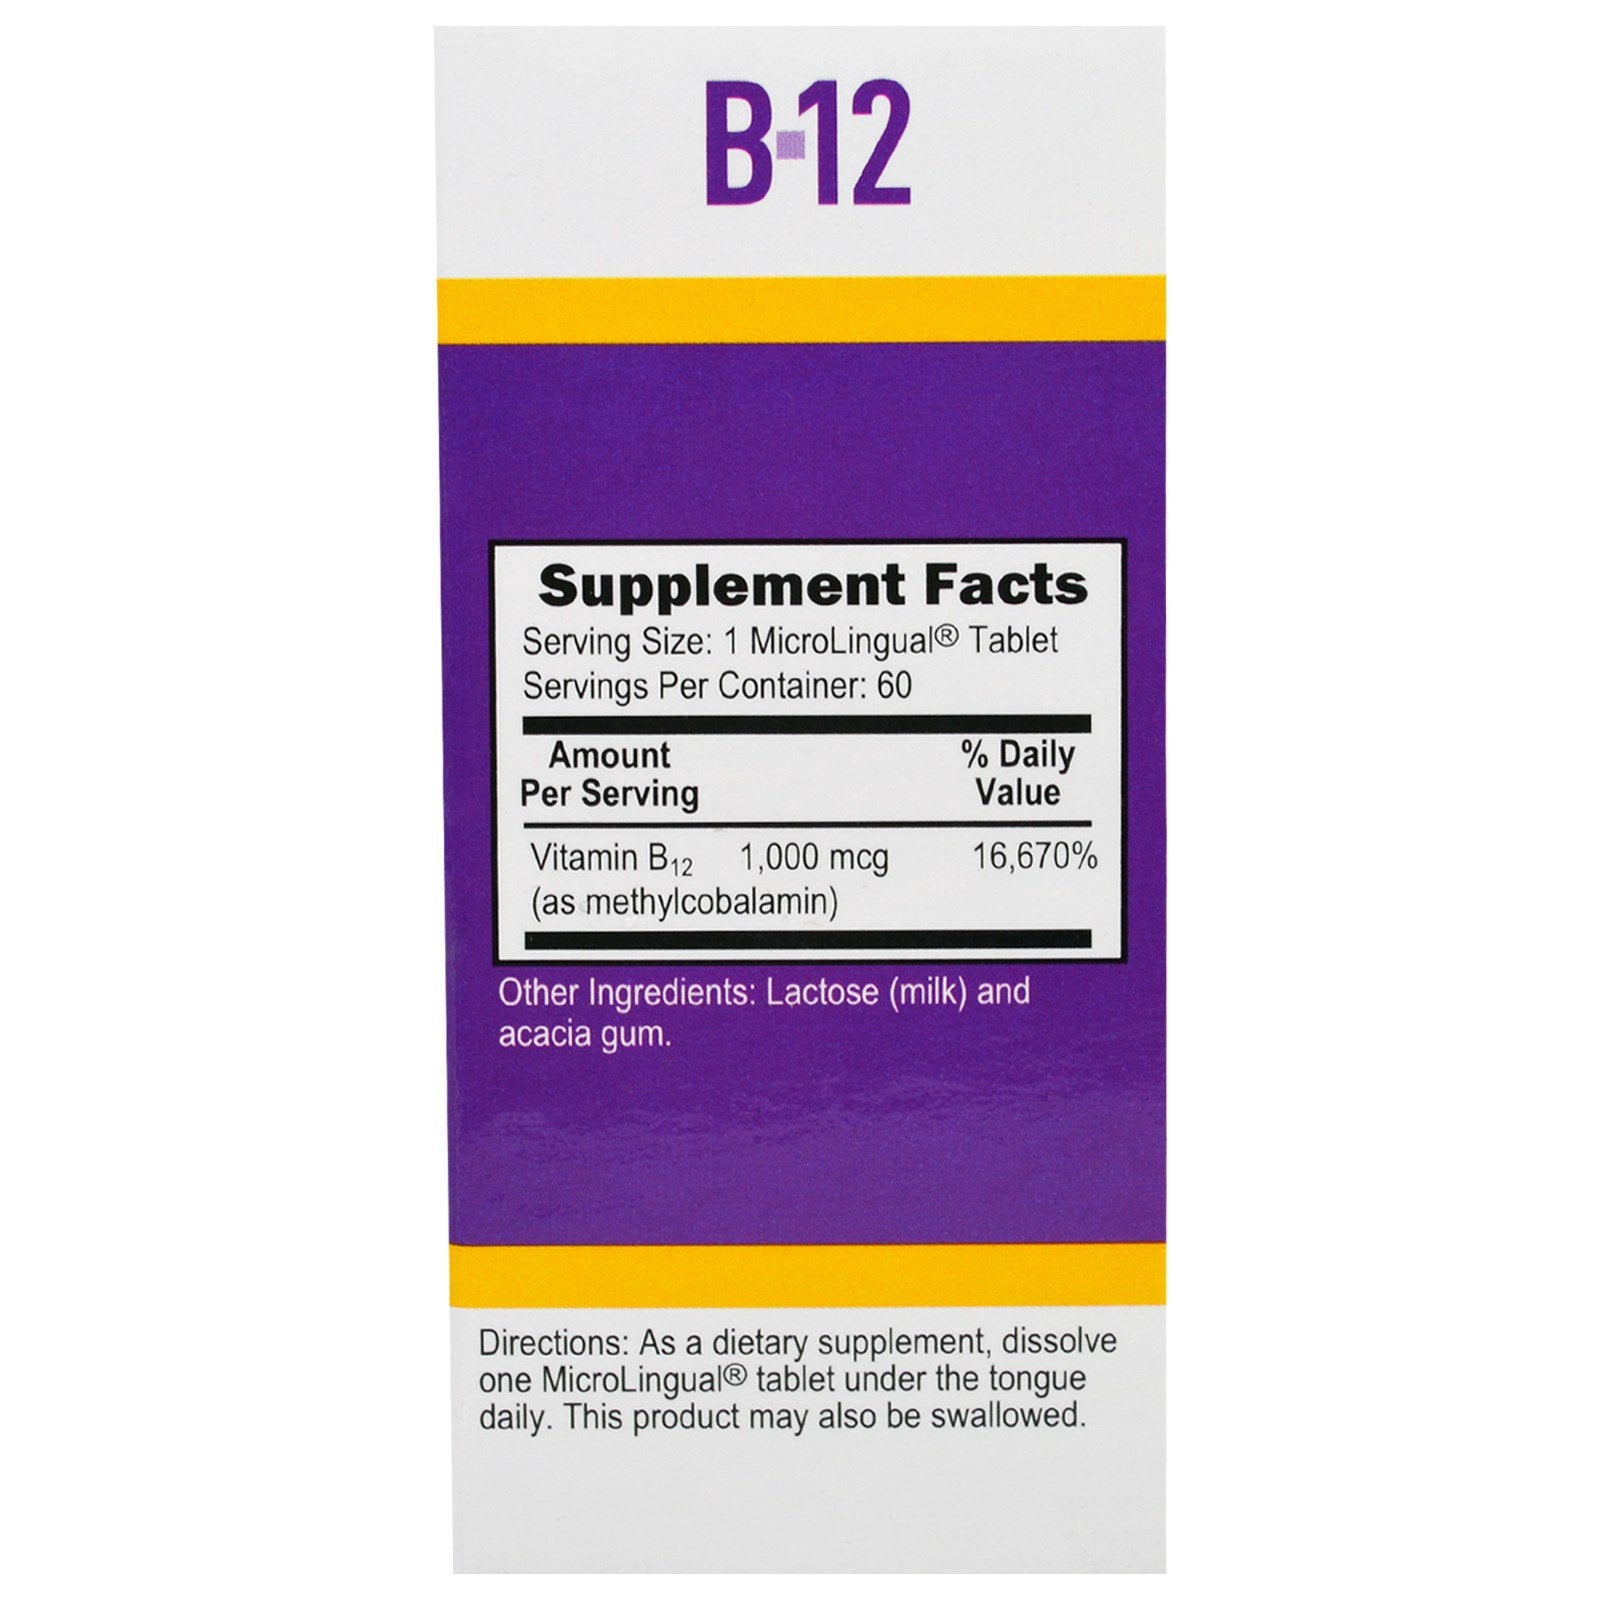 Superior Source, Methylcobalamin B-12, 1000 mcg, 60 Tablets